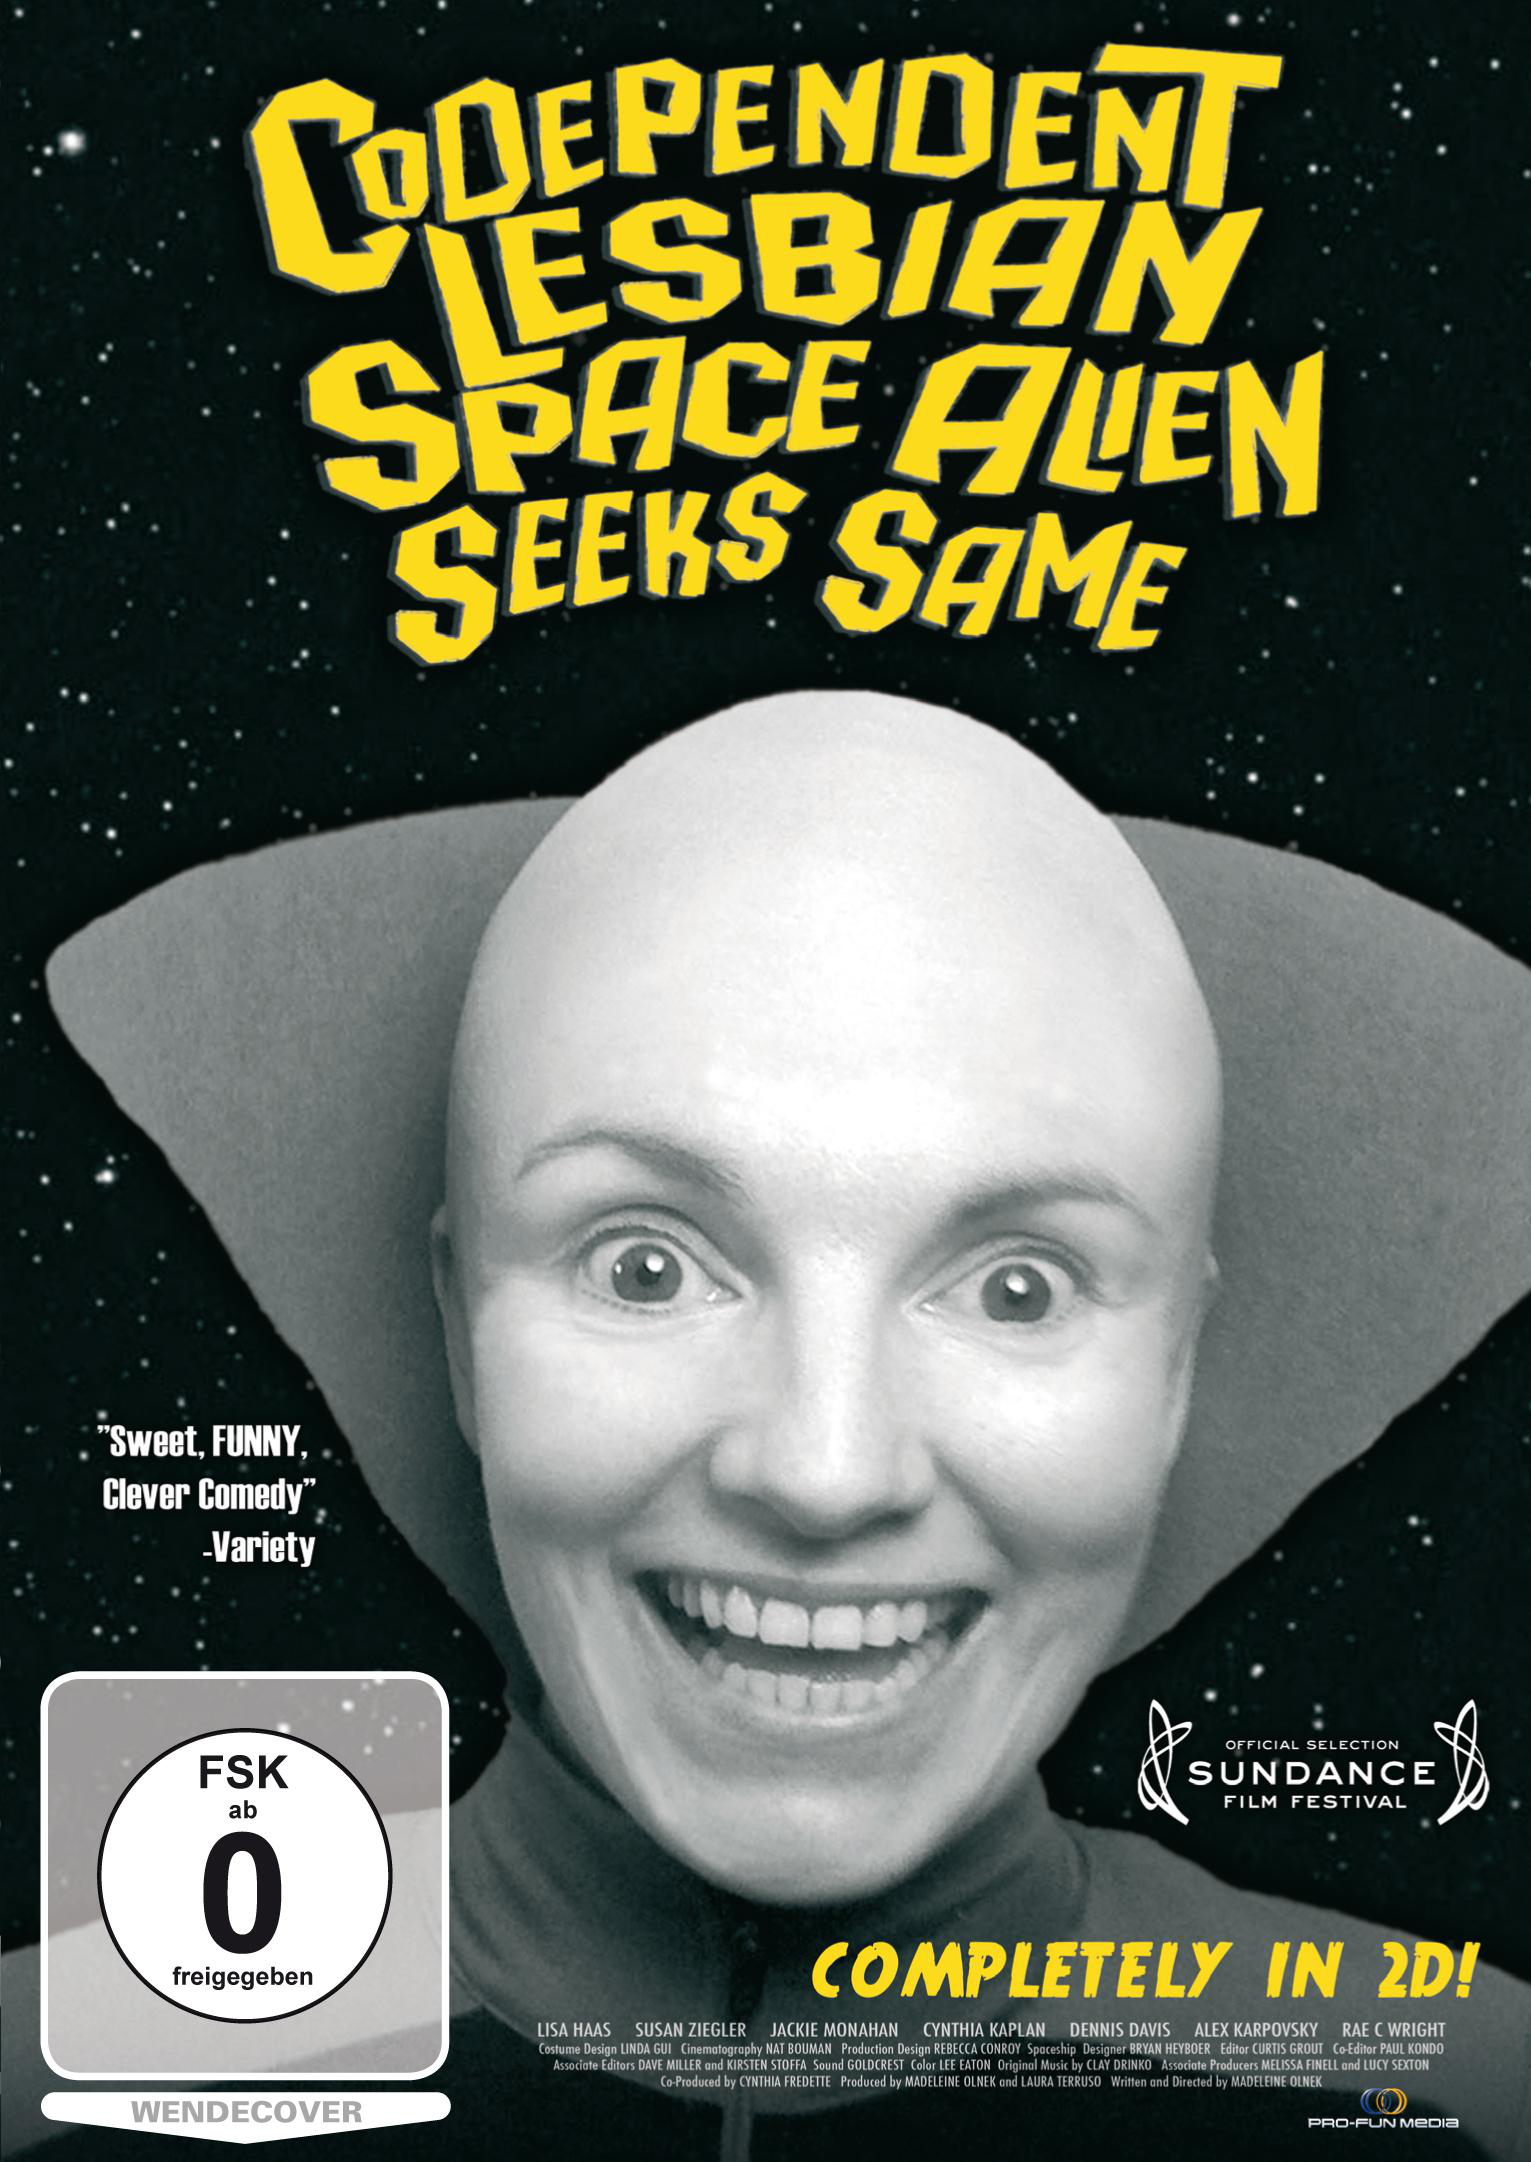 Codependent Lesbian Space DVD Alien Same Seeks